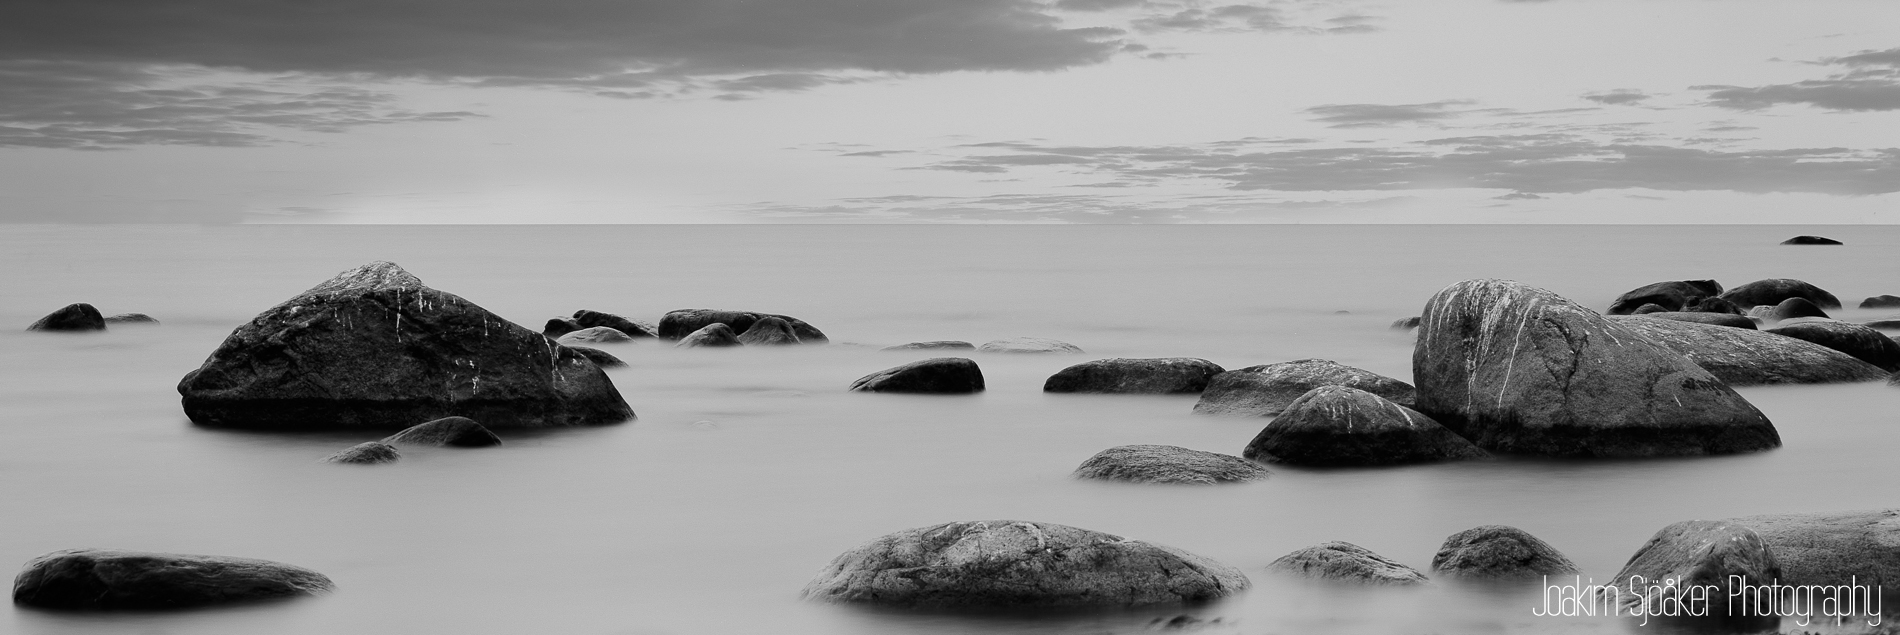 Joakim Sjöåker Photography bird shit on rocks Öland panorama 6x17 acros